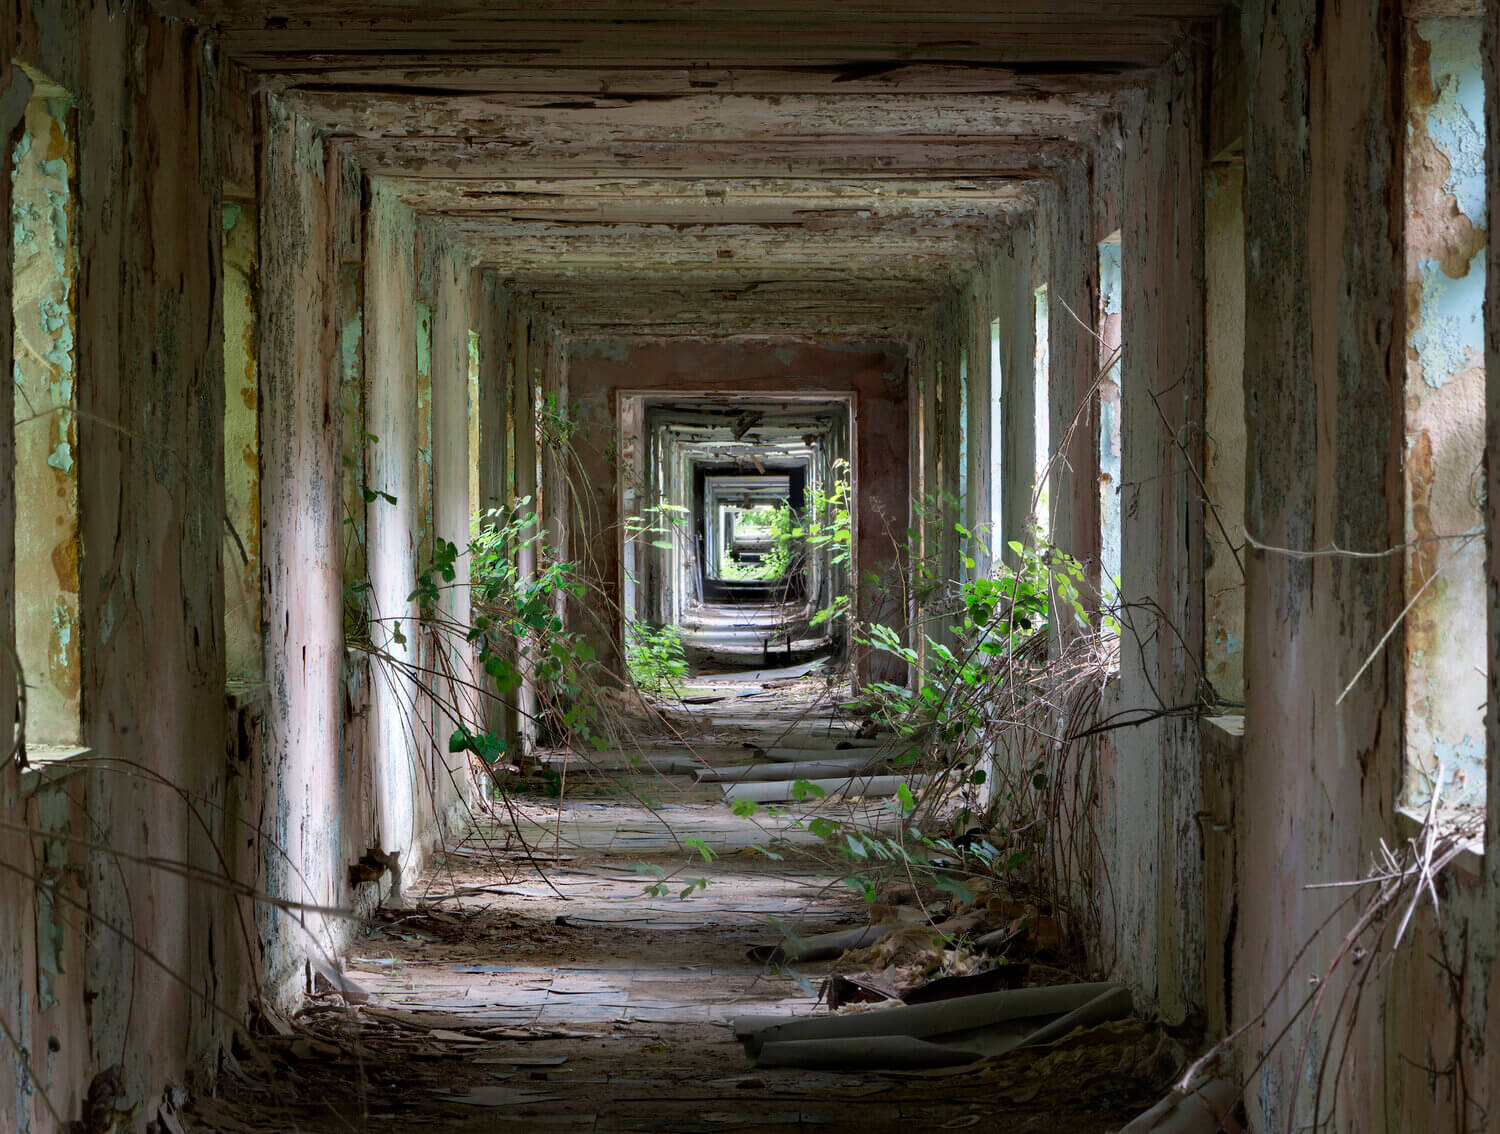 Matt Emmett's limited edition photograph of Abandoned Corridors for Forgotten Heritage